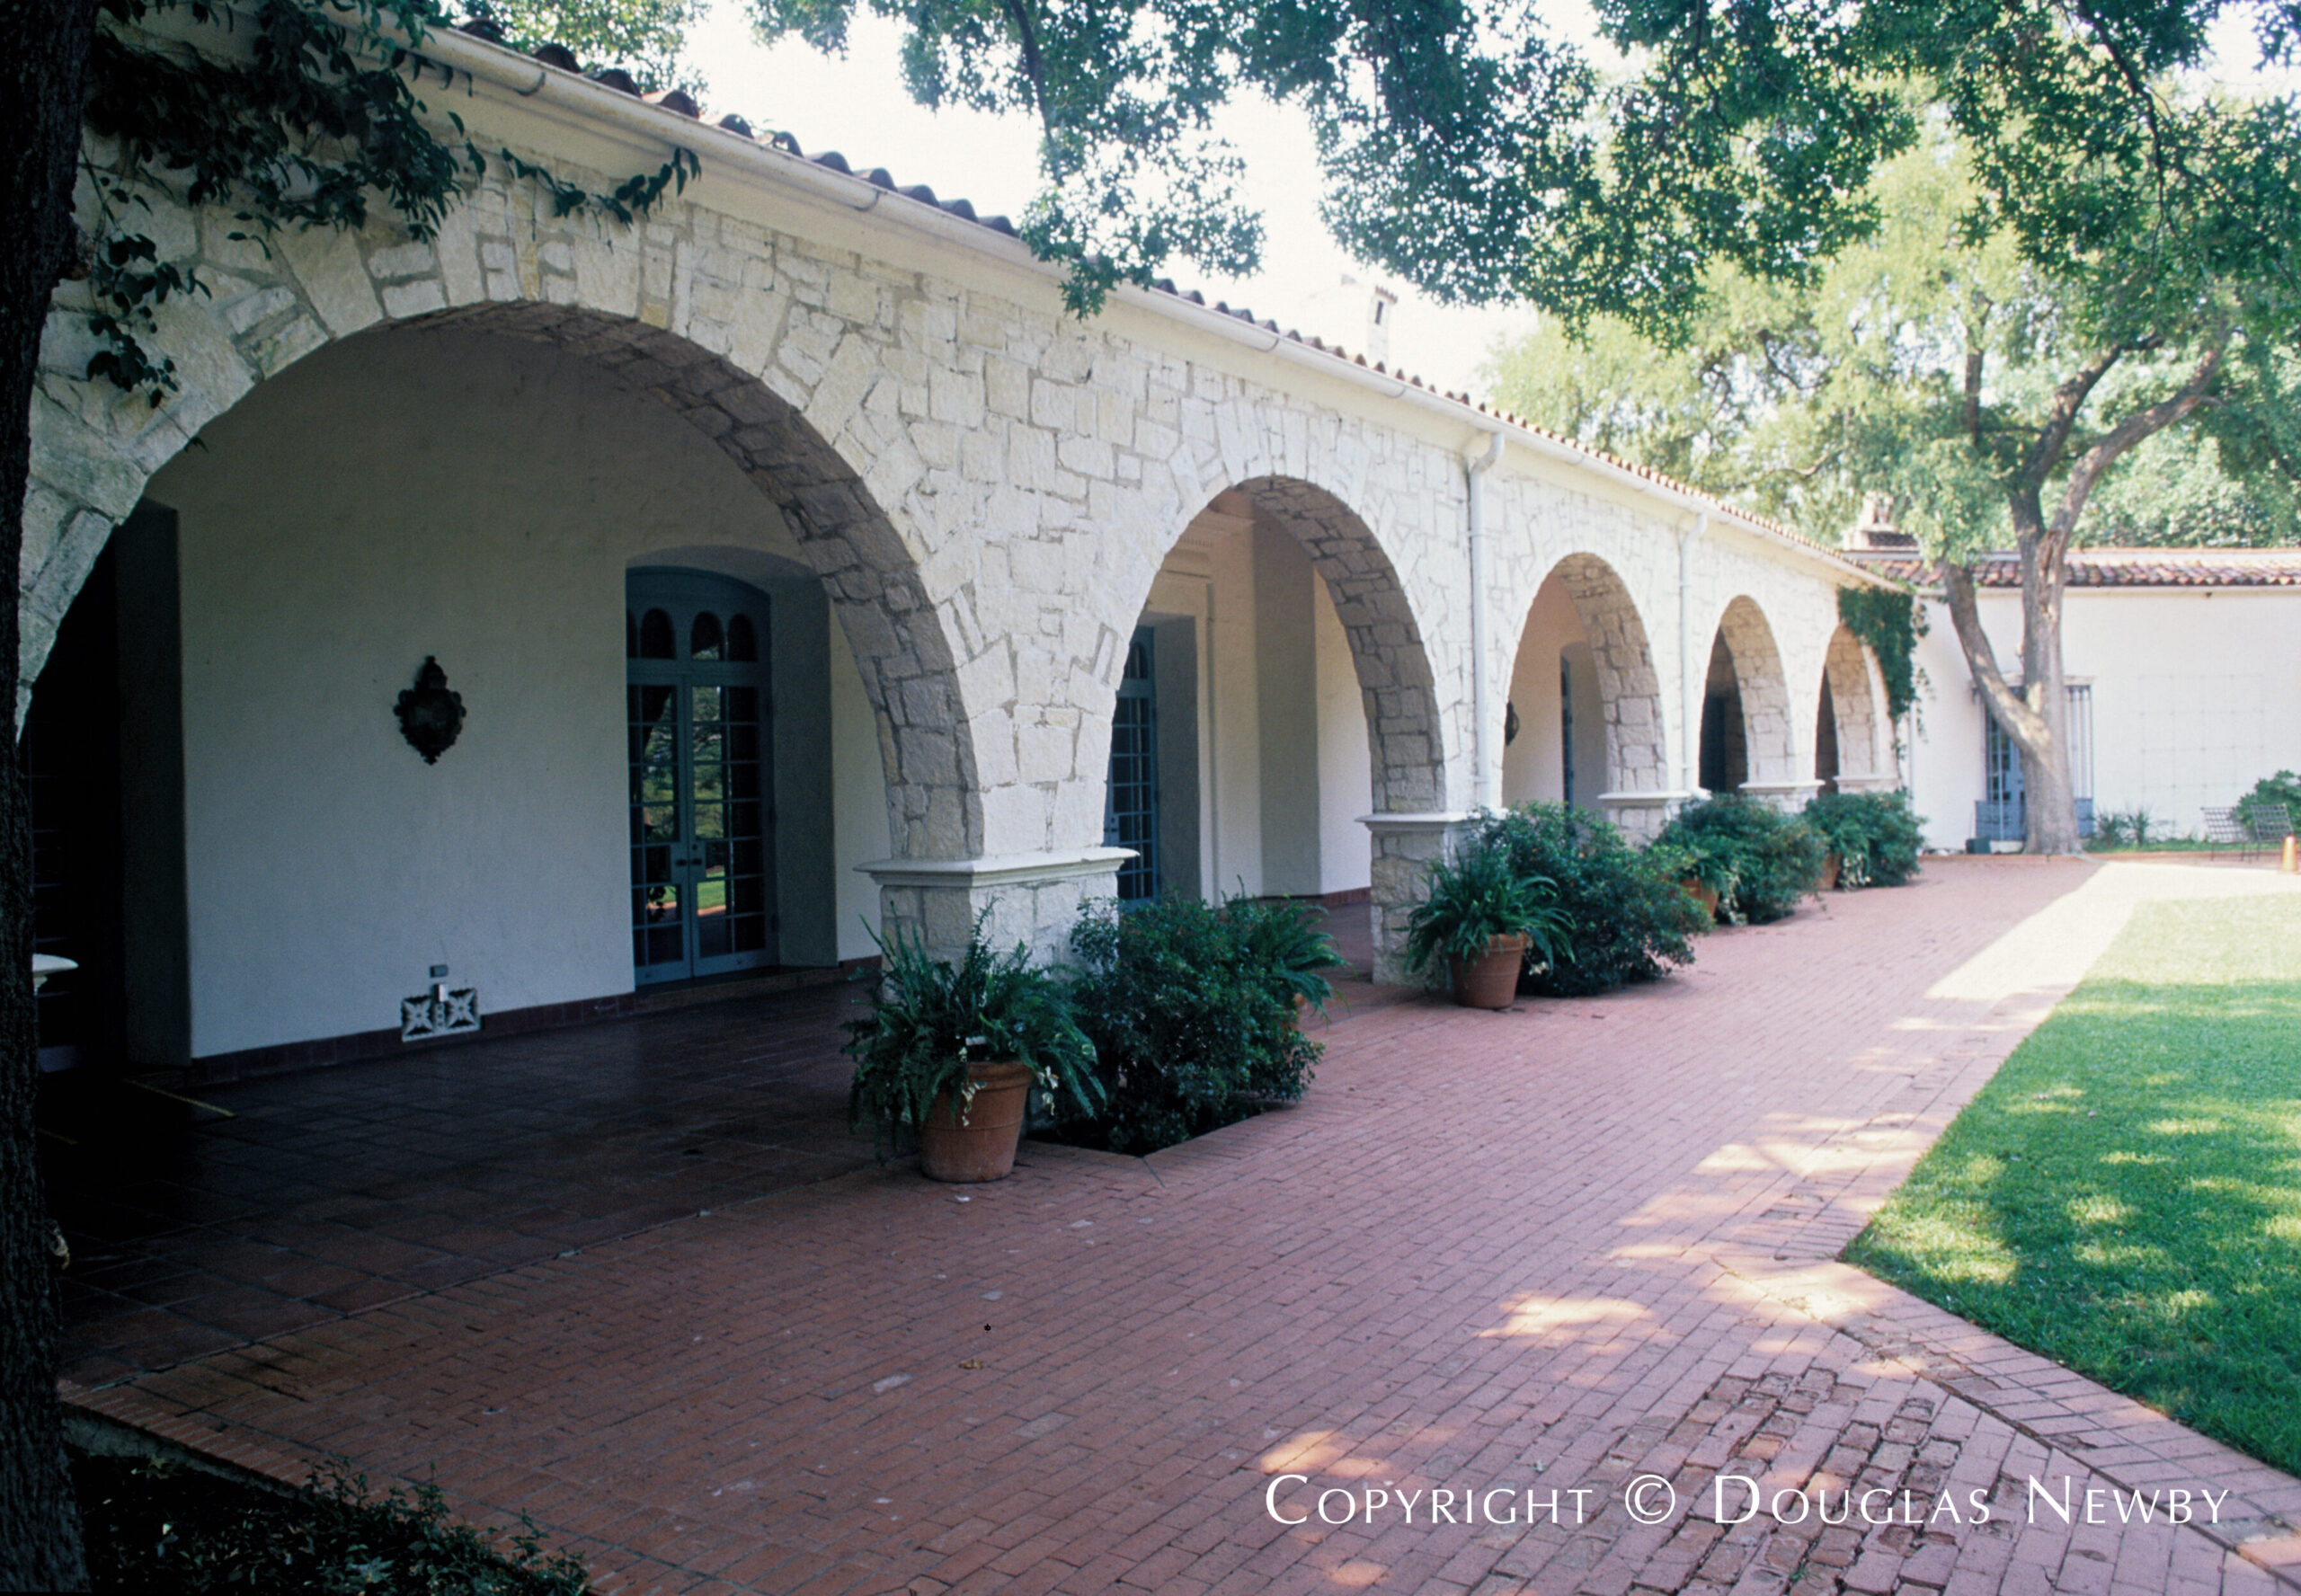 Original hacienda style DeGolyer estate home at White Rock Lake designed by architects Shutt and Scott.